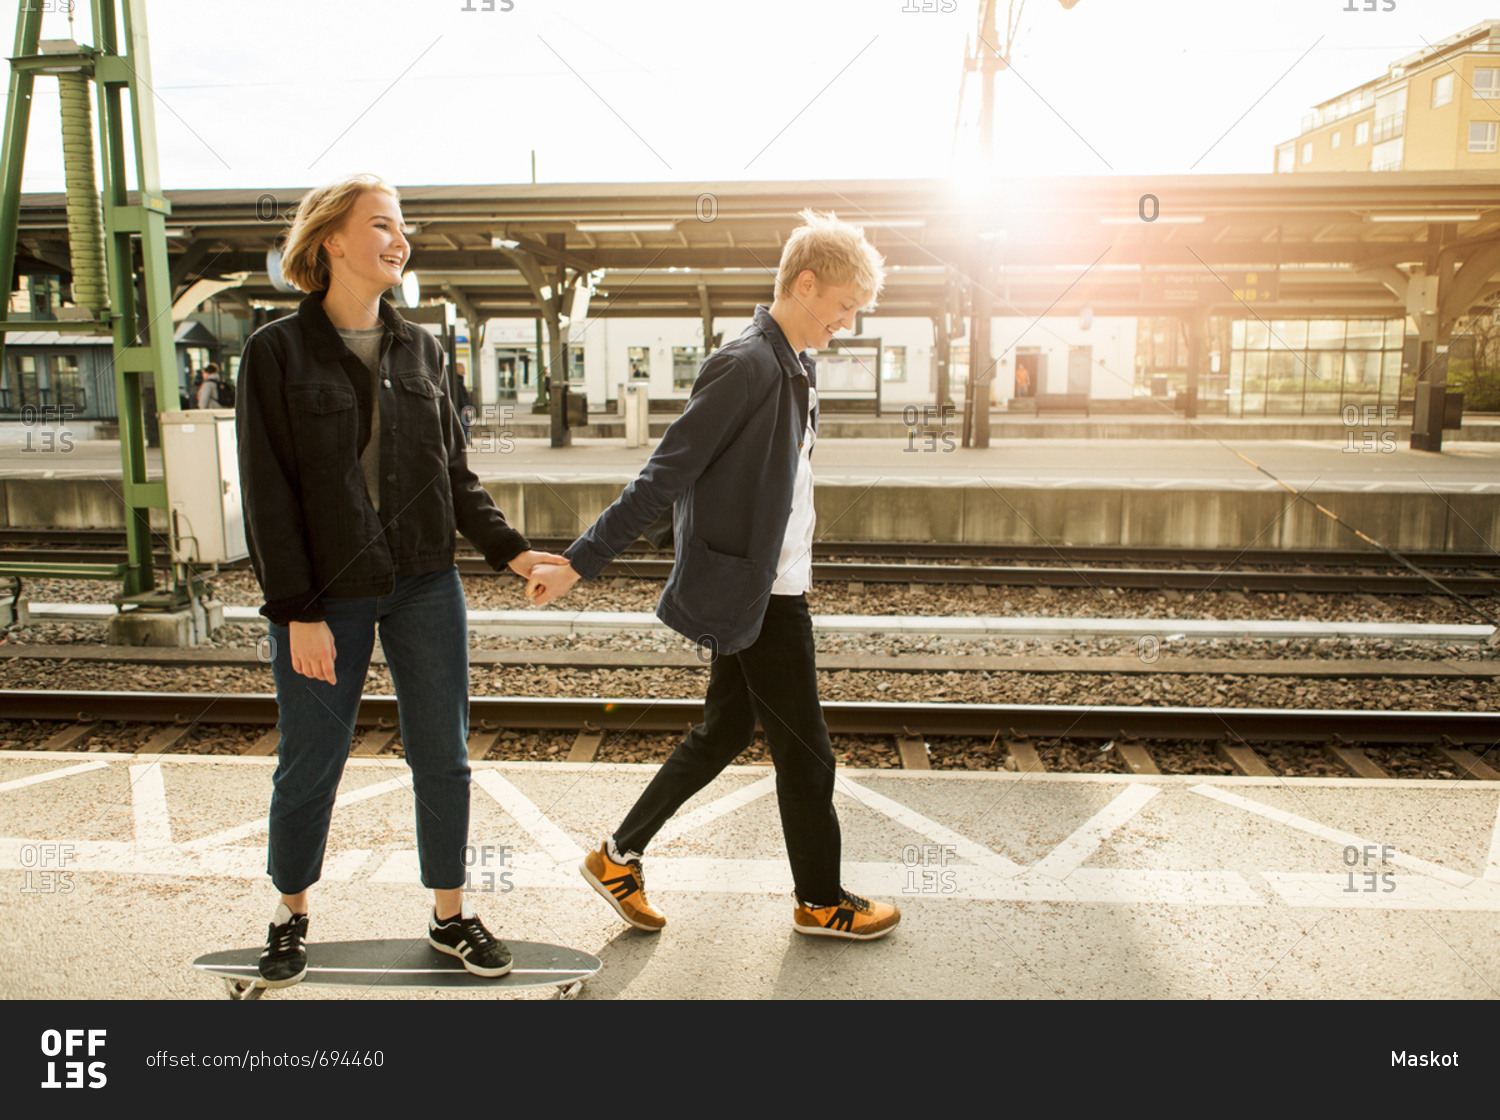 Full length of young man pulling teenage girl on skateboard at railroad station platform